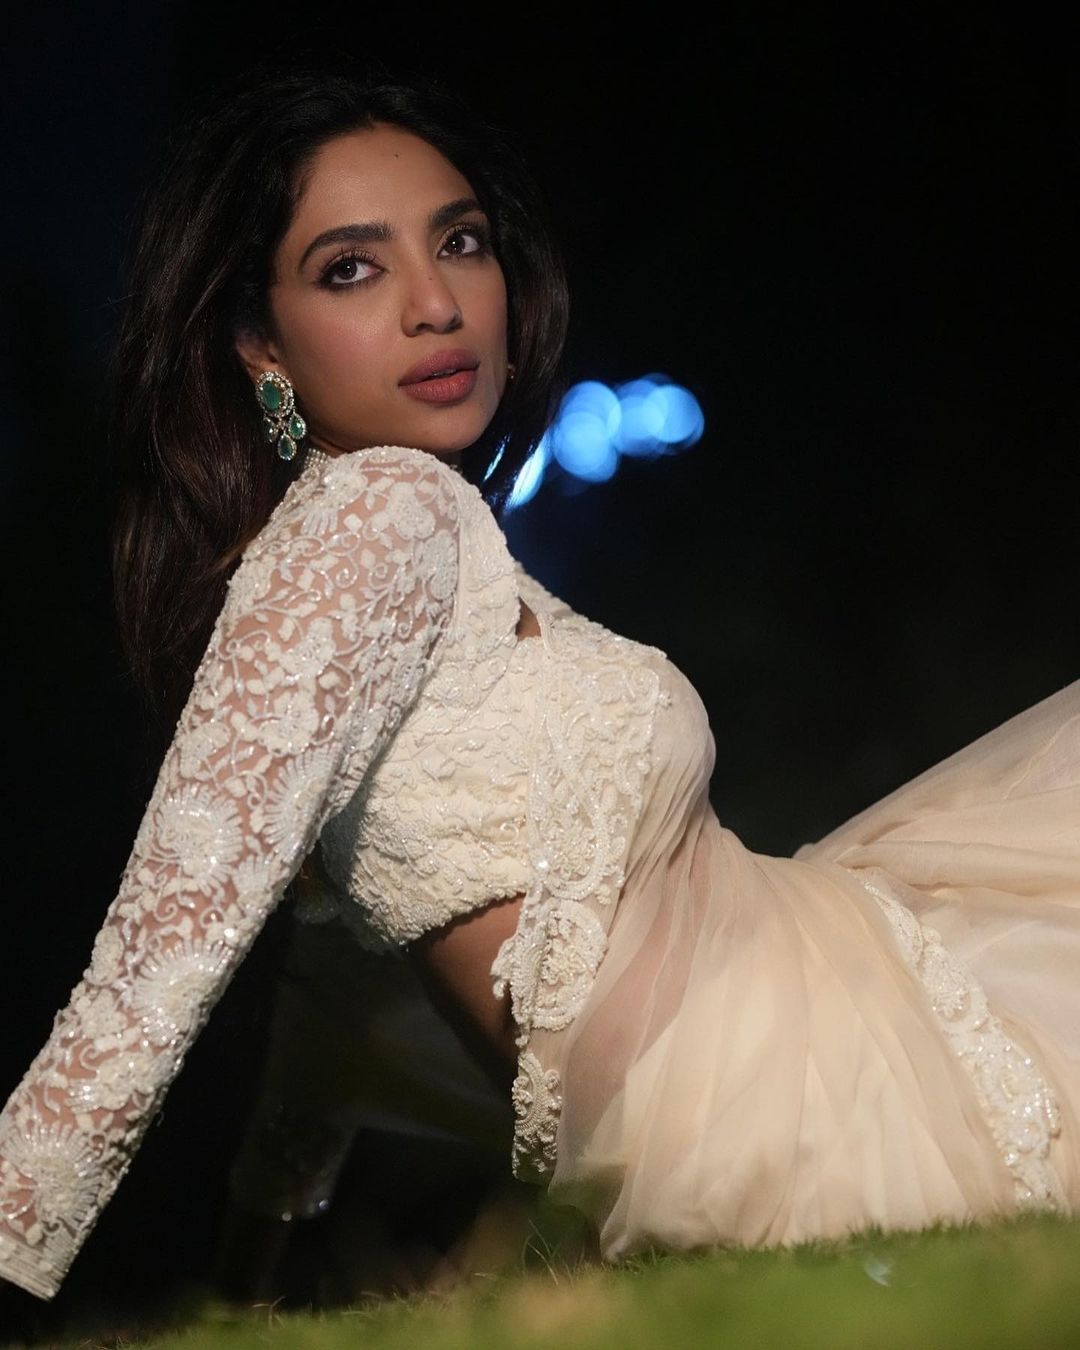 sobhita-dhulipala-stunning-looks-in-gorgeous-white-saree